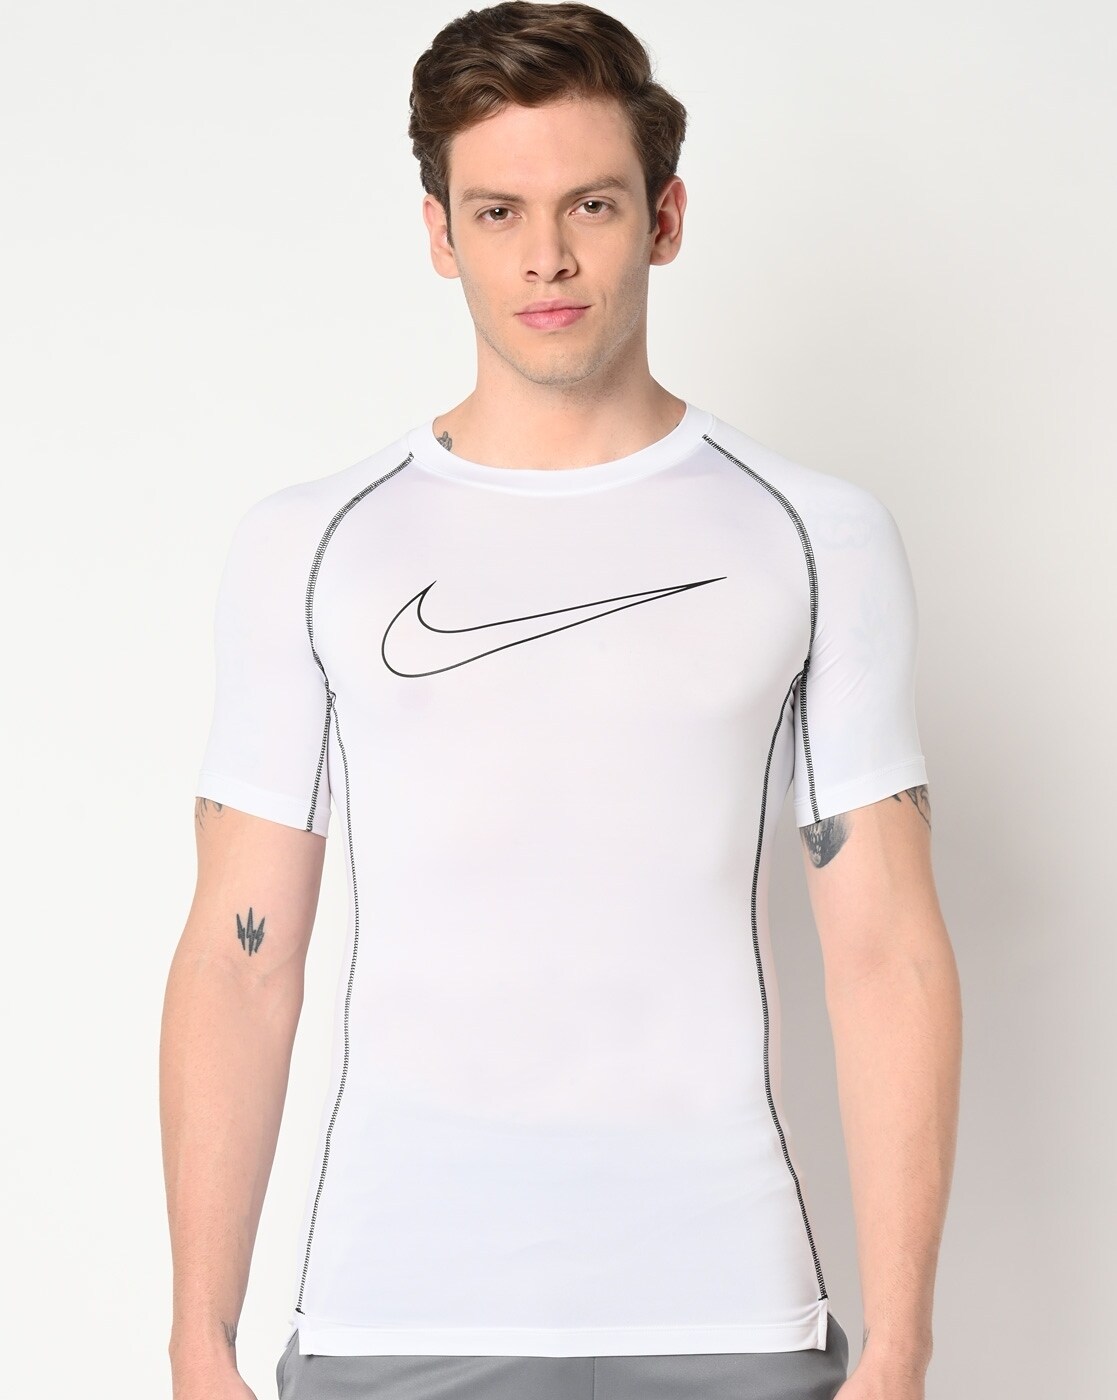 Buy White & Black Tshirts for Men by NIKE Online